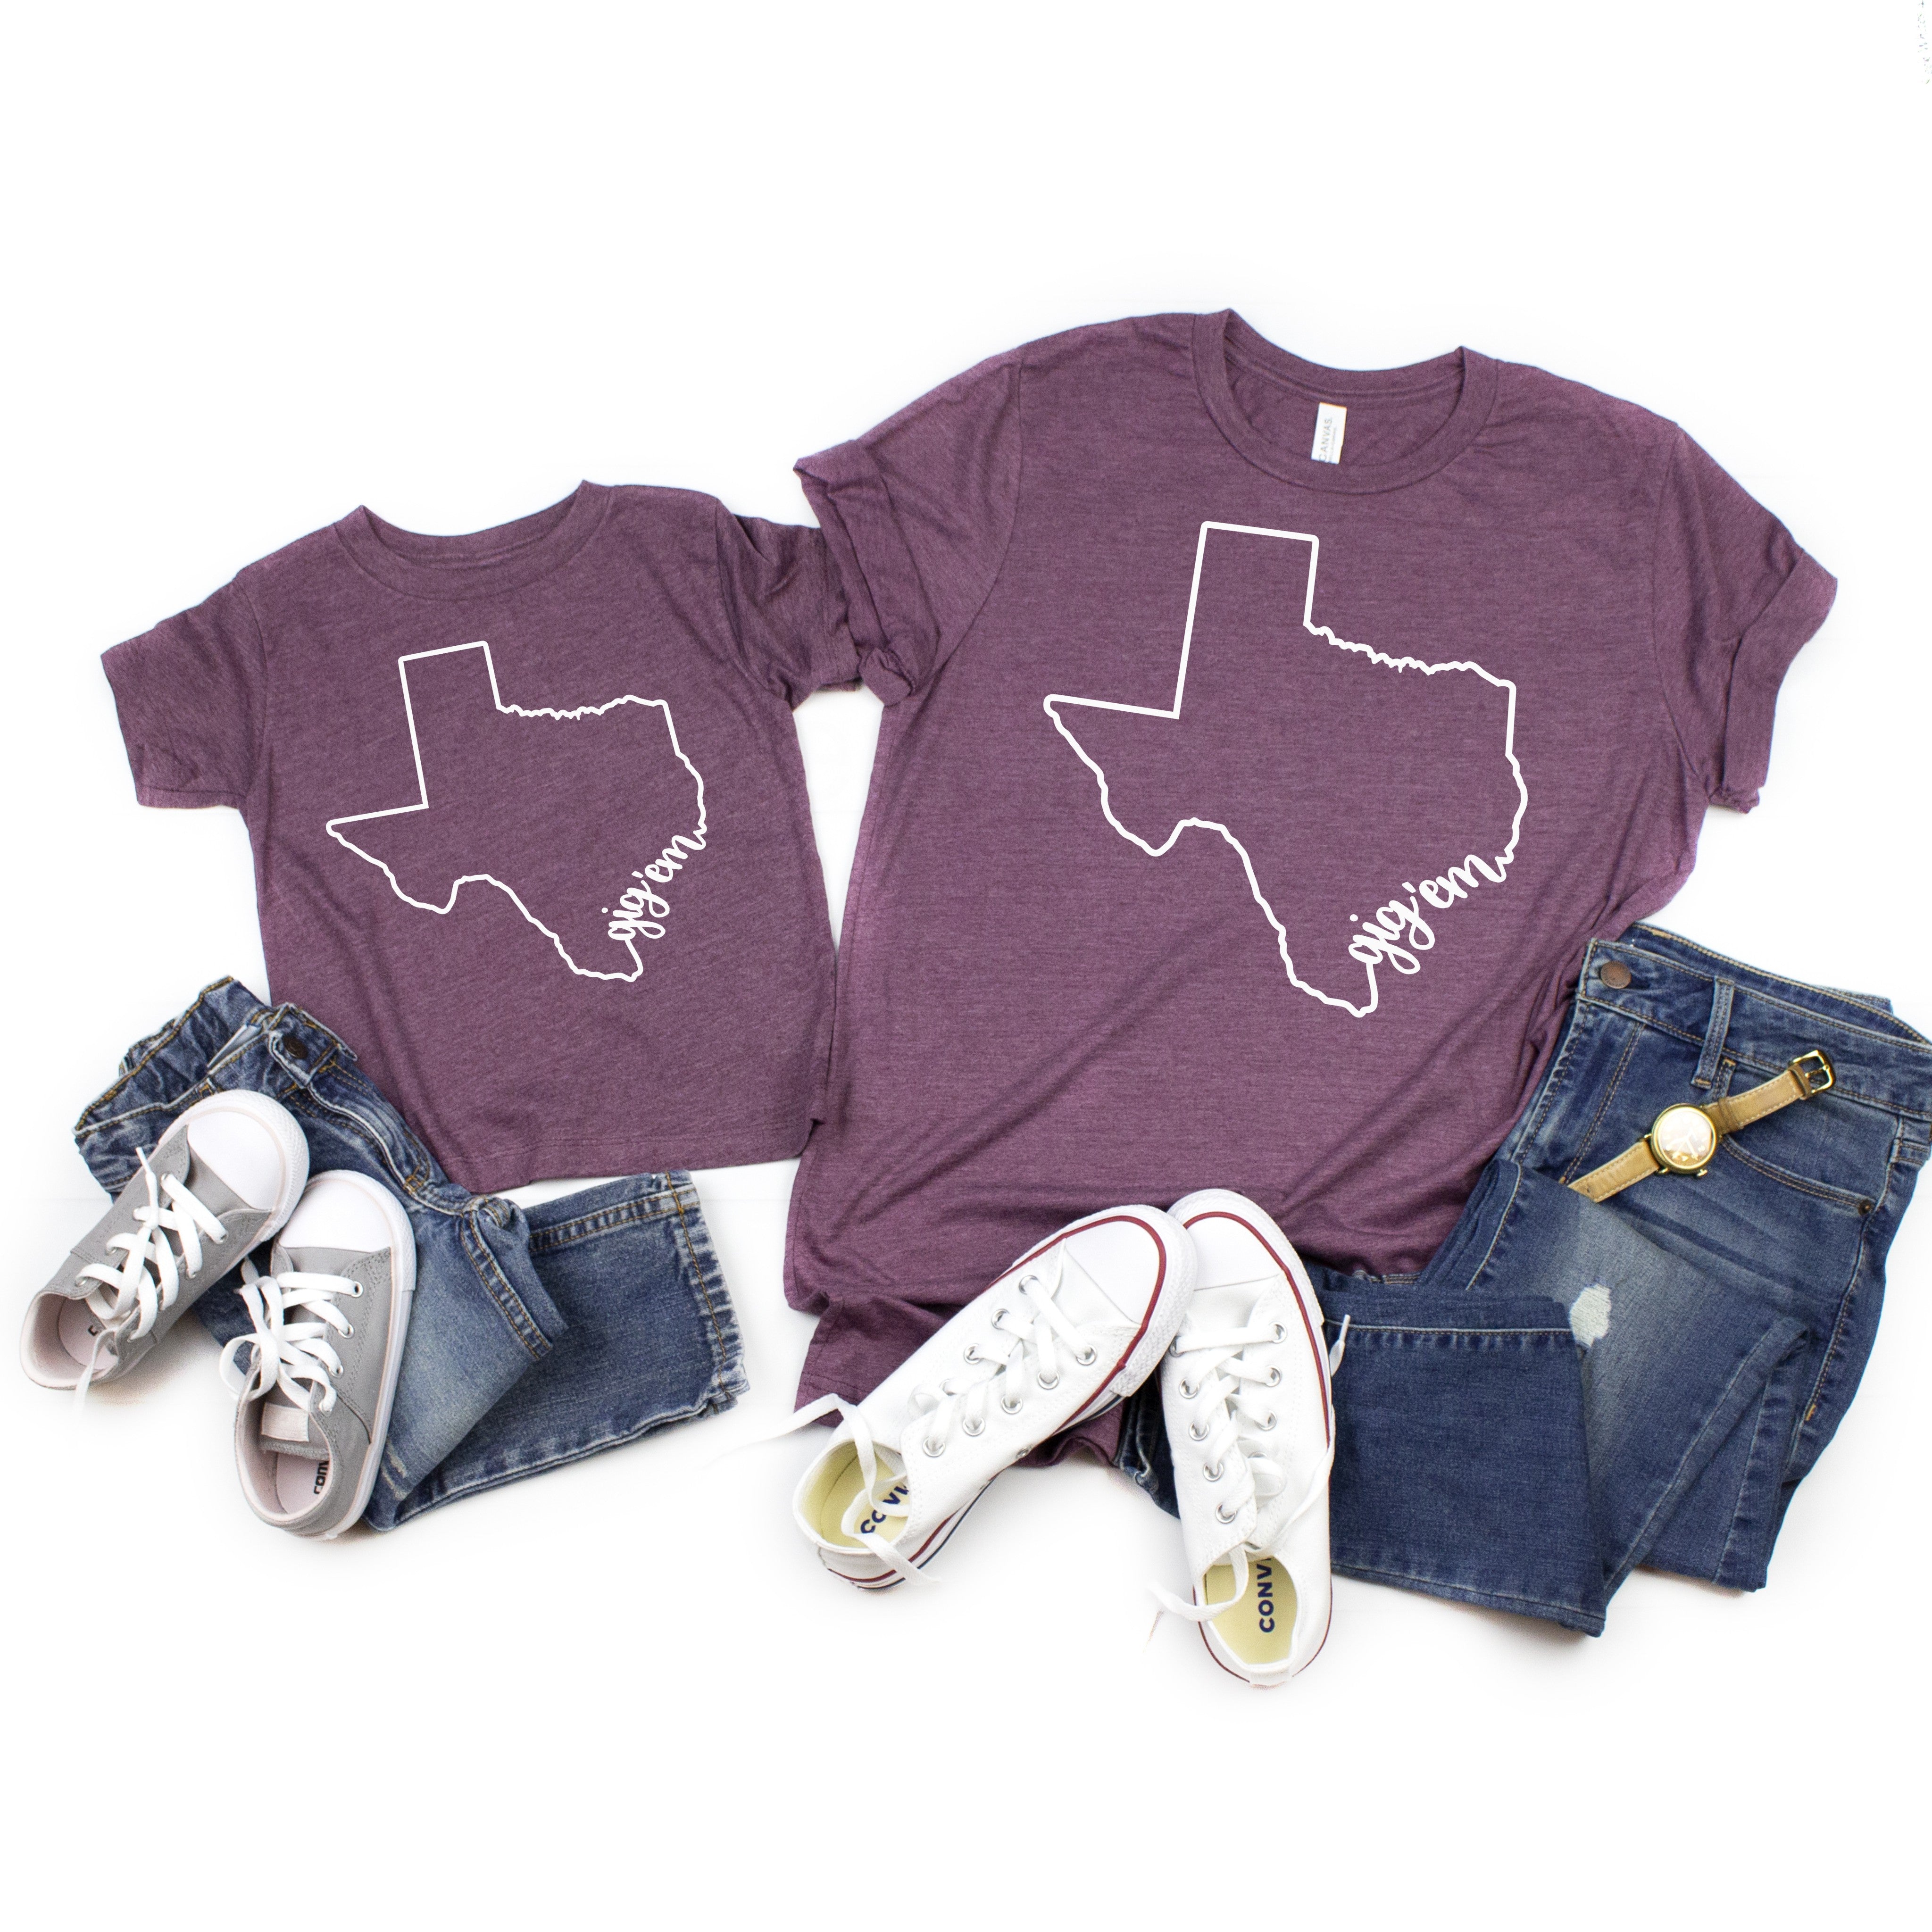 Gigem Aggies Texas Toddler or Youth Shirt Game Day Shirt 